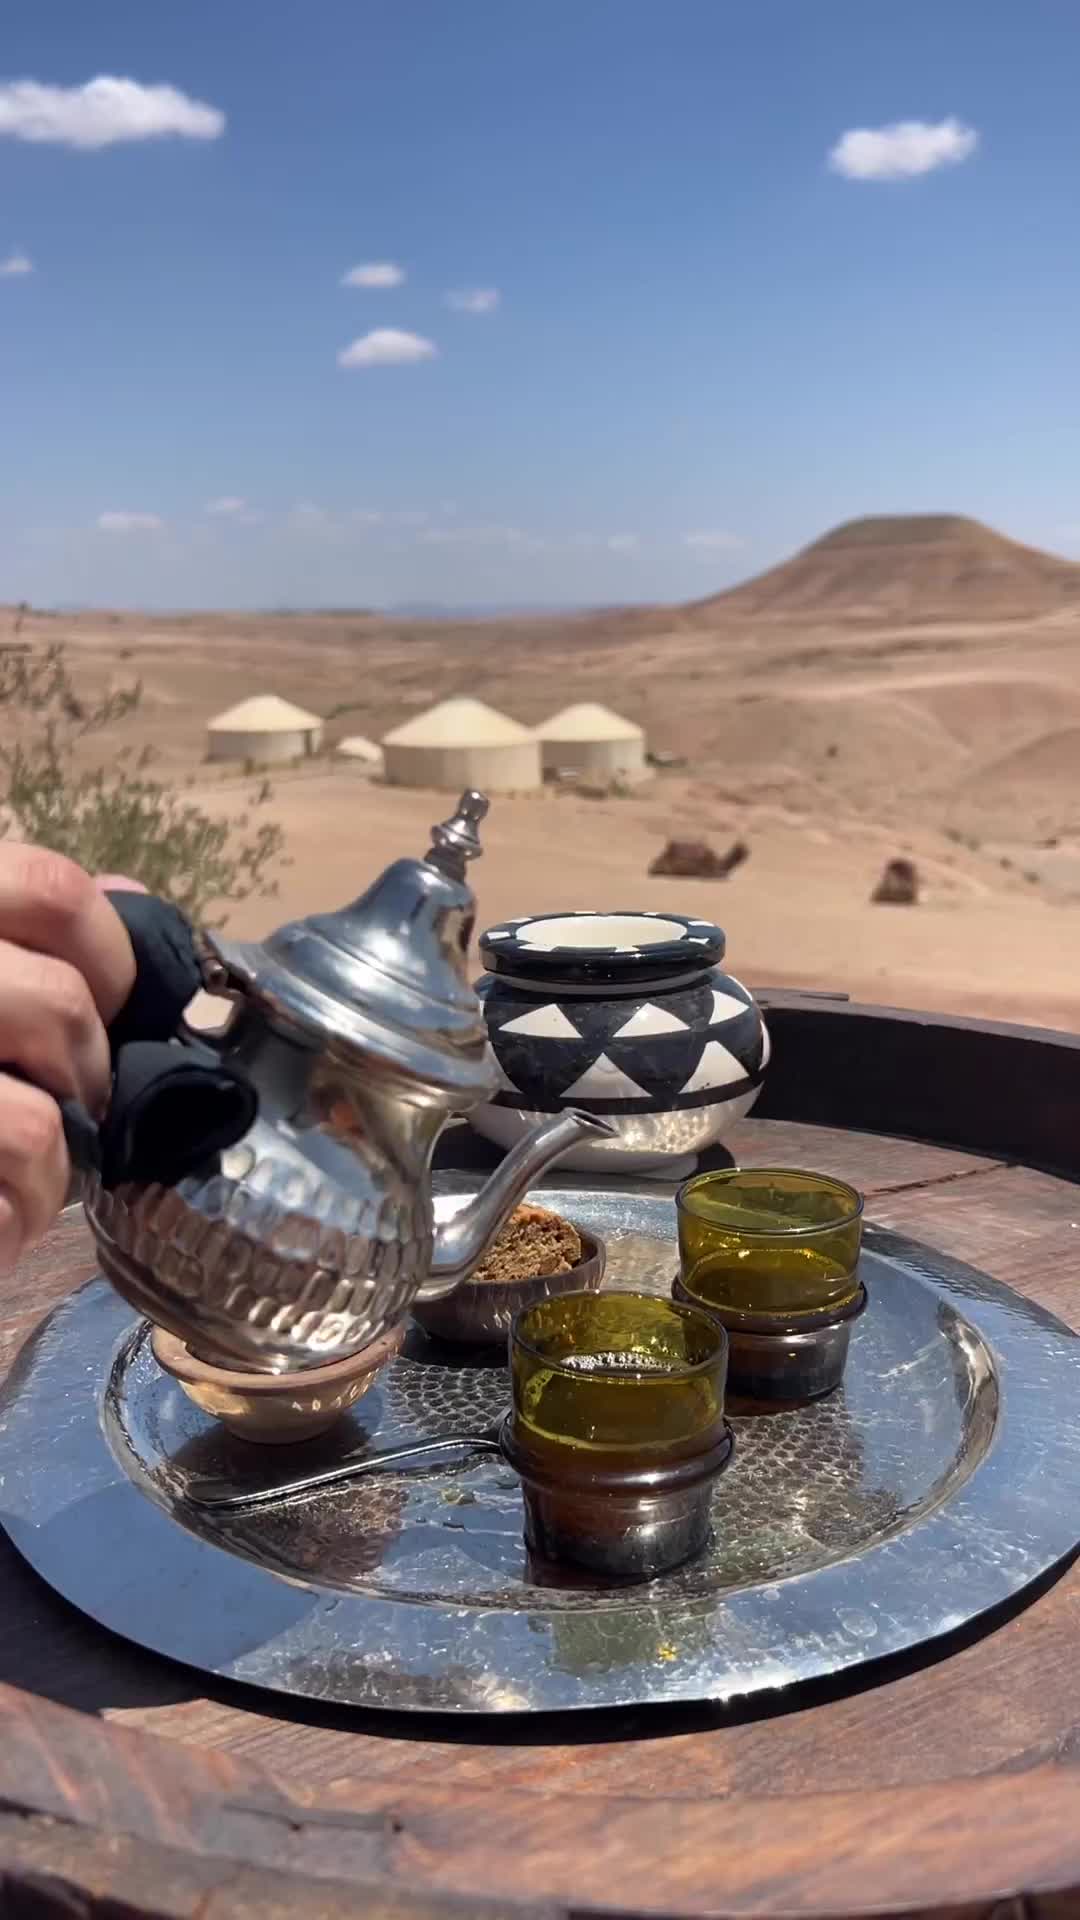 Discover BE Agafay: Morocco's Hidden Desert Gem